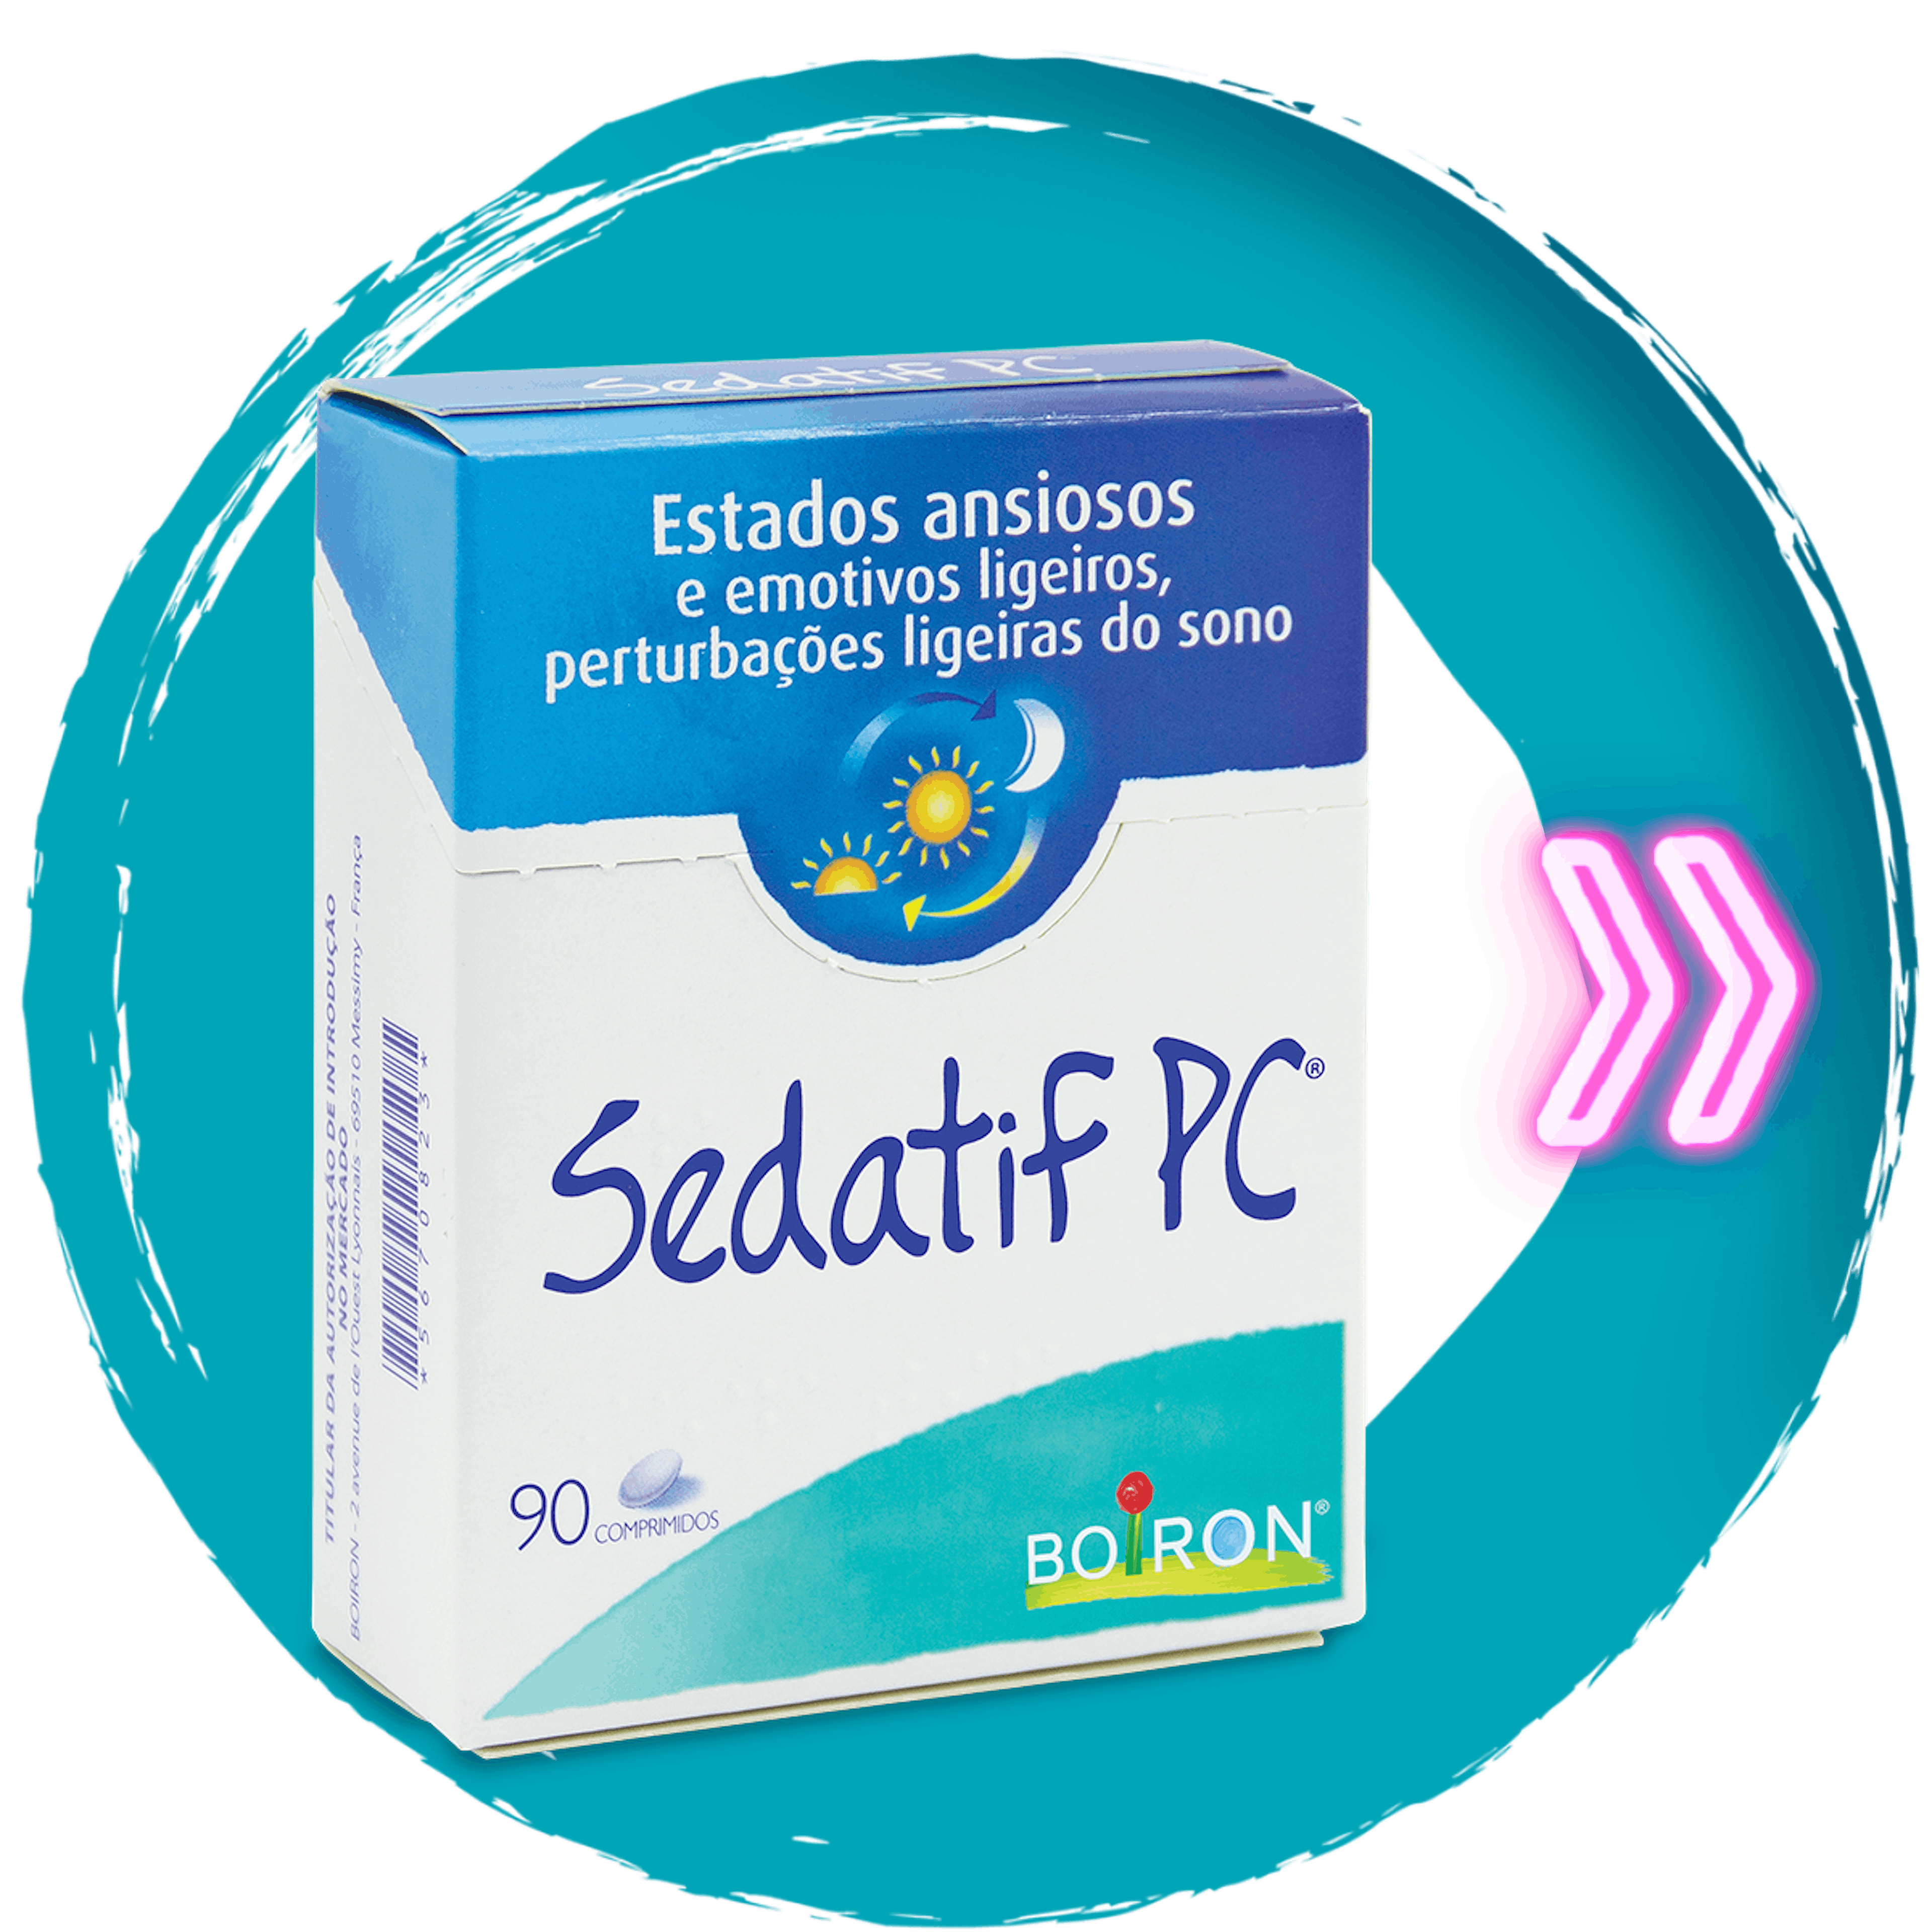 Reaja com Sedatif PC